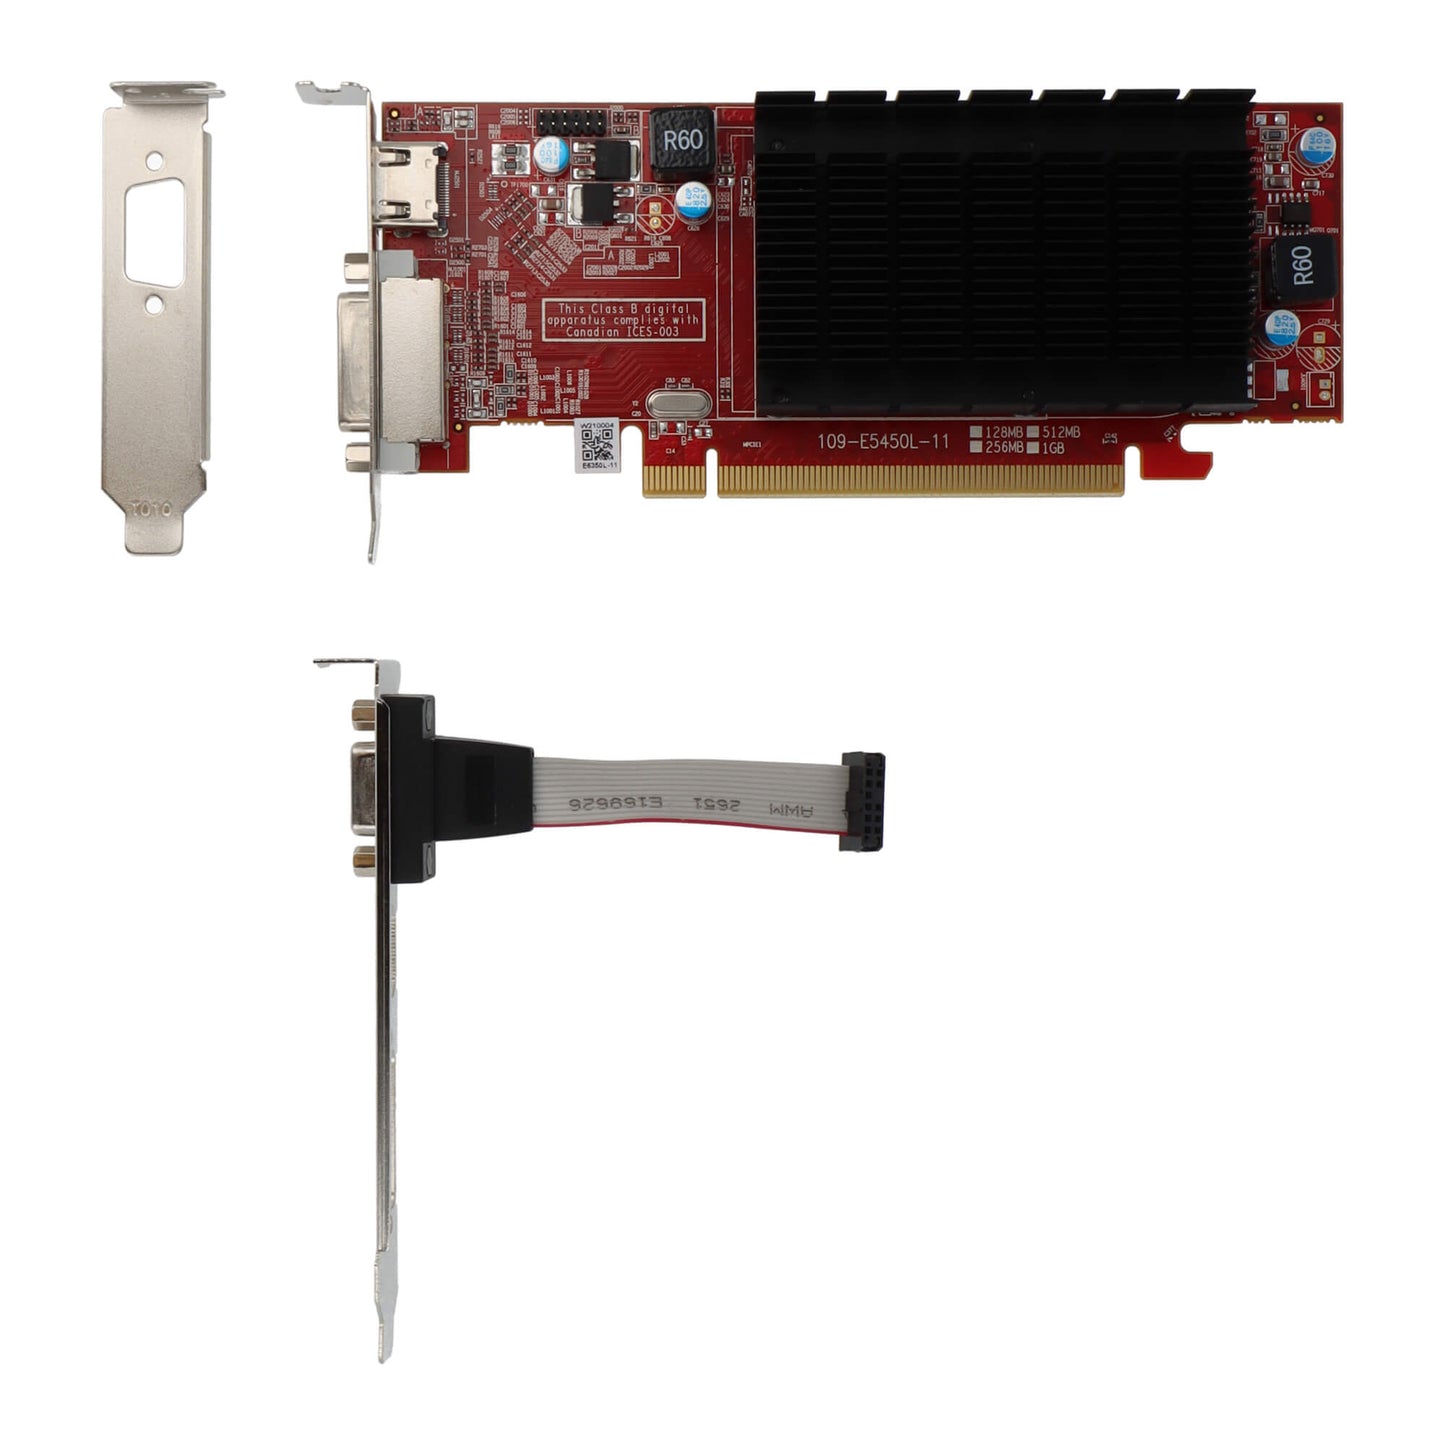 Radeon HD 6350 SFF 1GB GDDR3  (DVI-I, HDMI, VGA*)